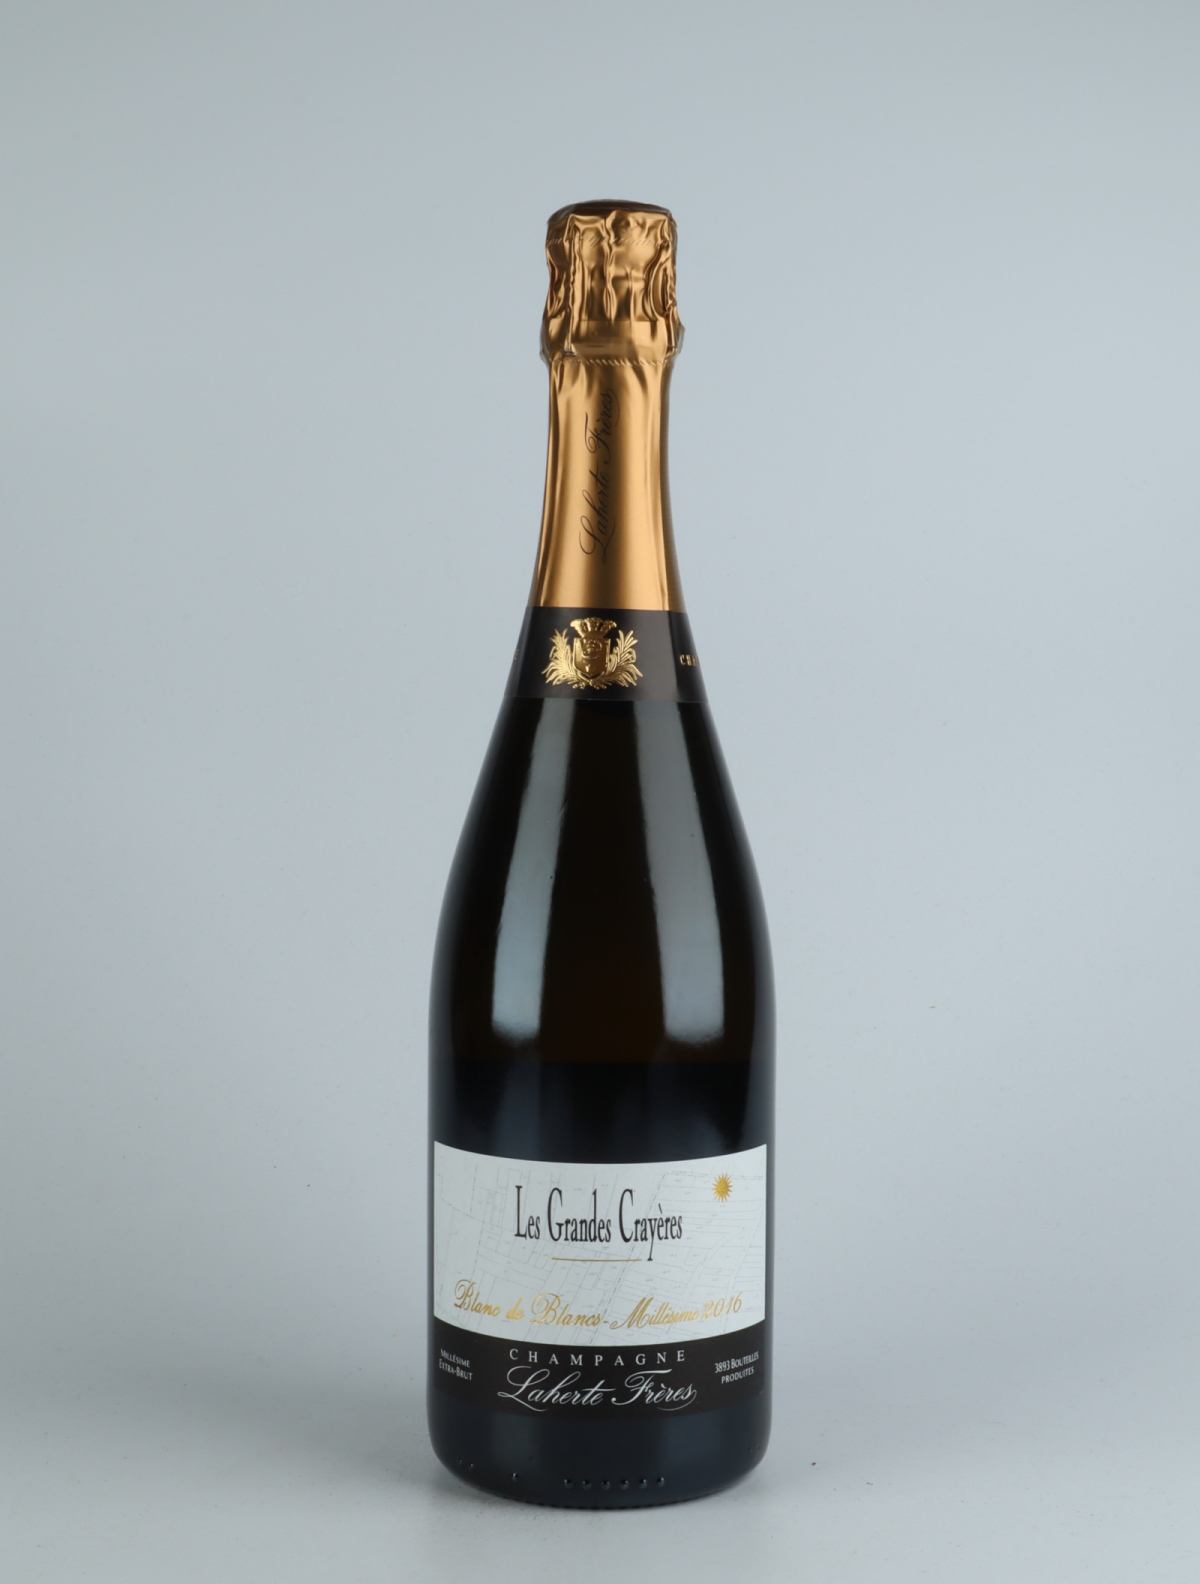 A bottle 2016 Les Grandes Crayeres Sparkling from Laherte Frères, Champagne in France